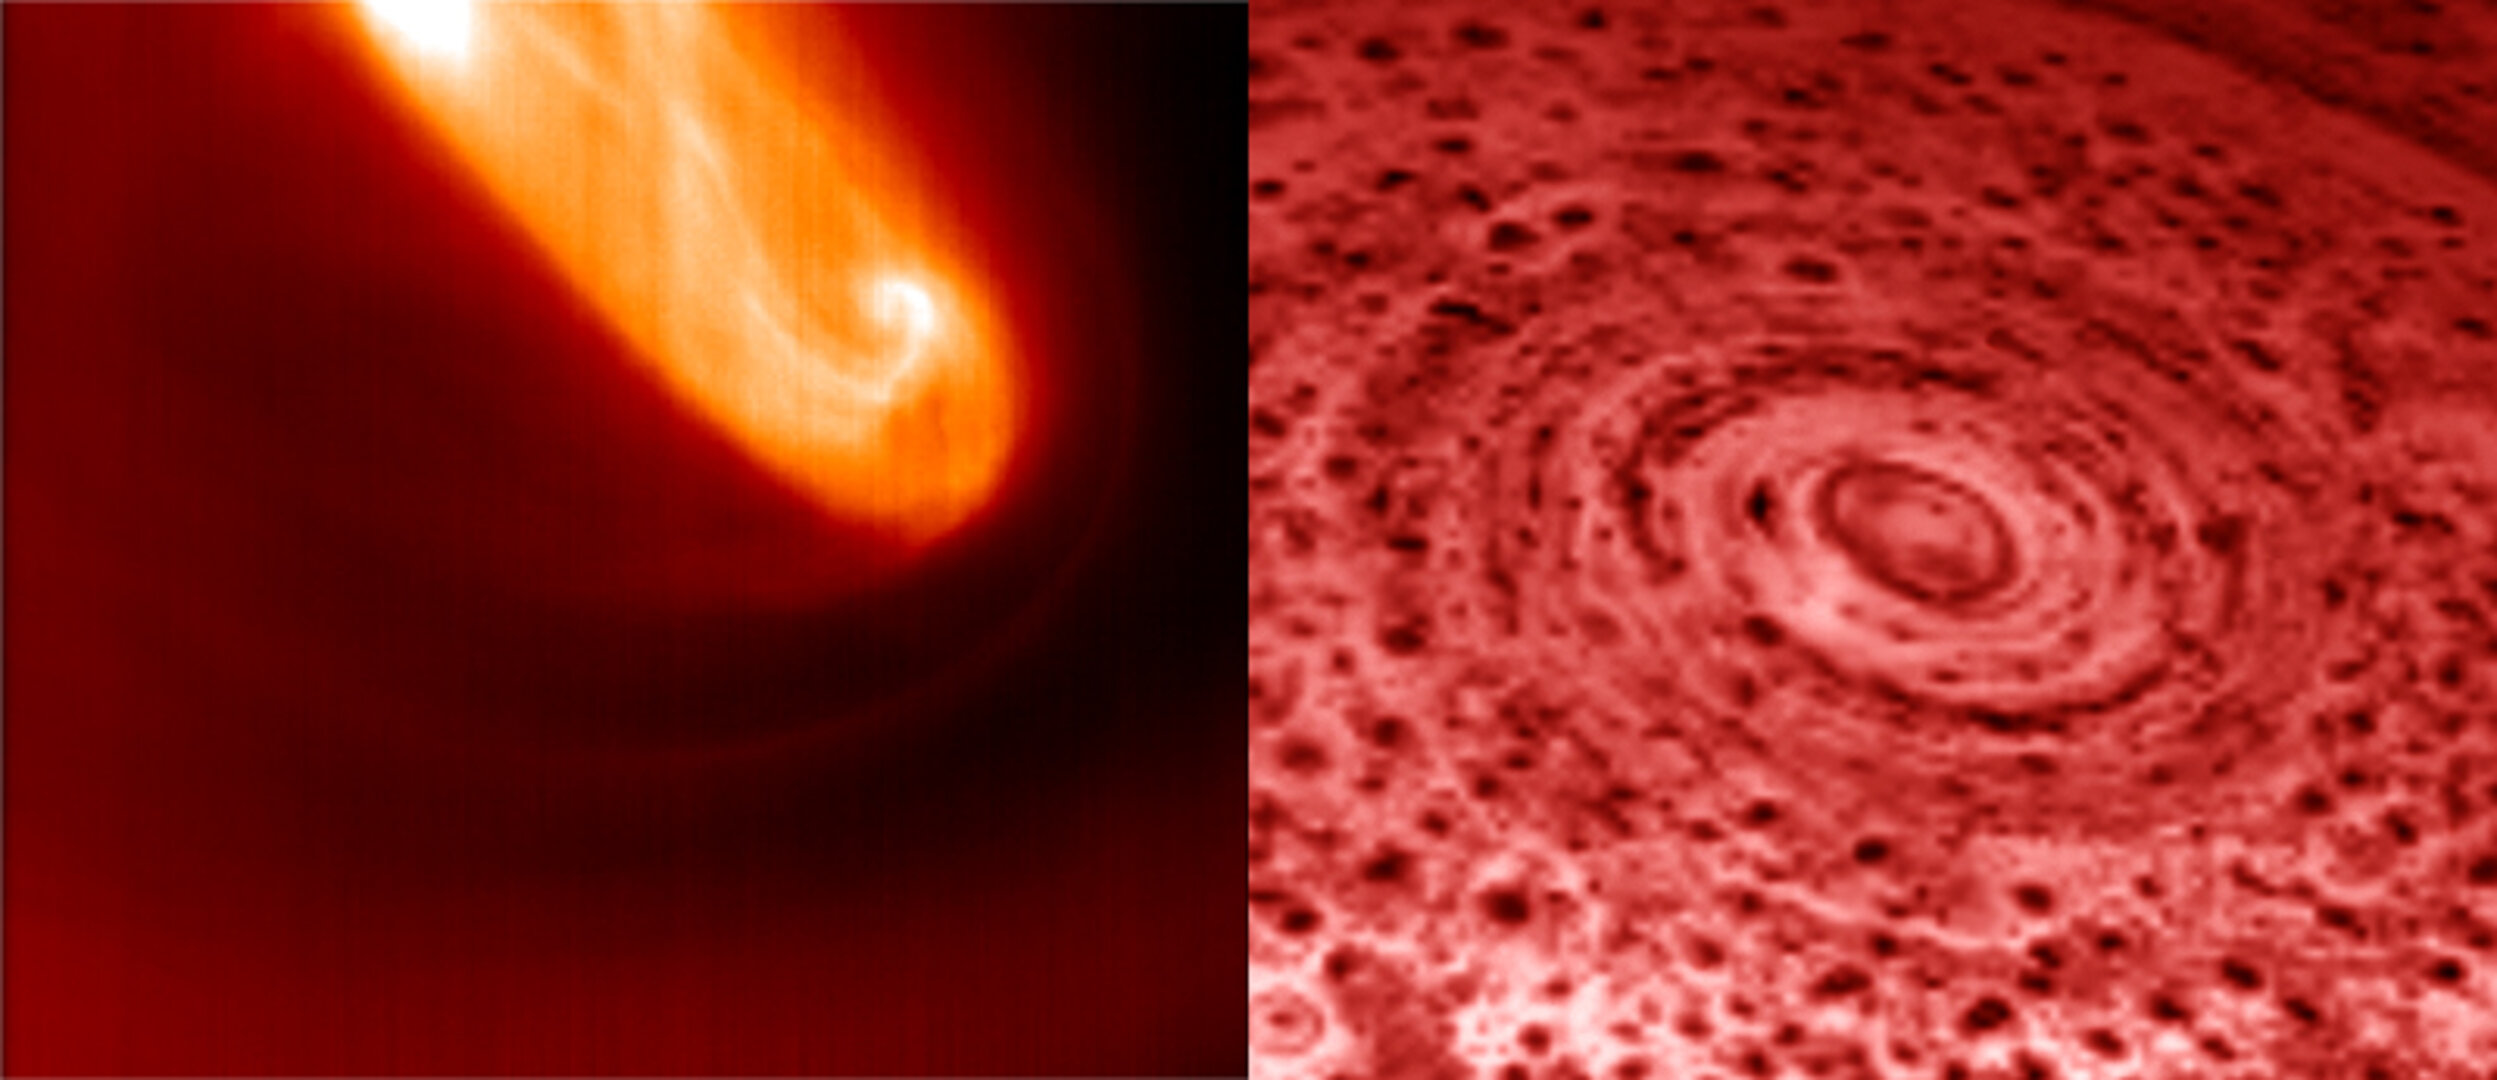 Polar vortices at Venus and Saturn compared